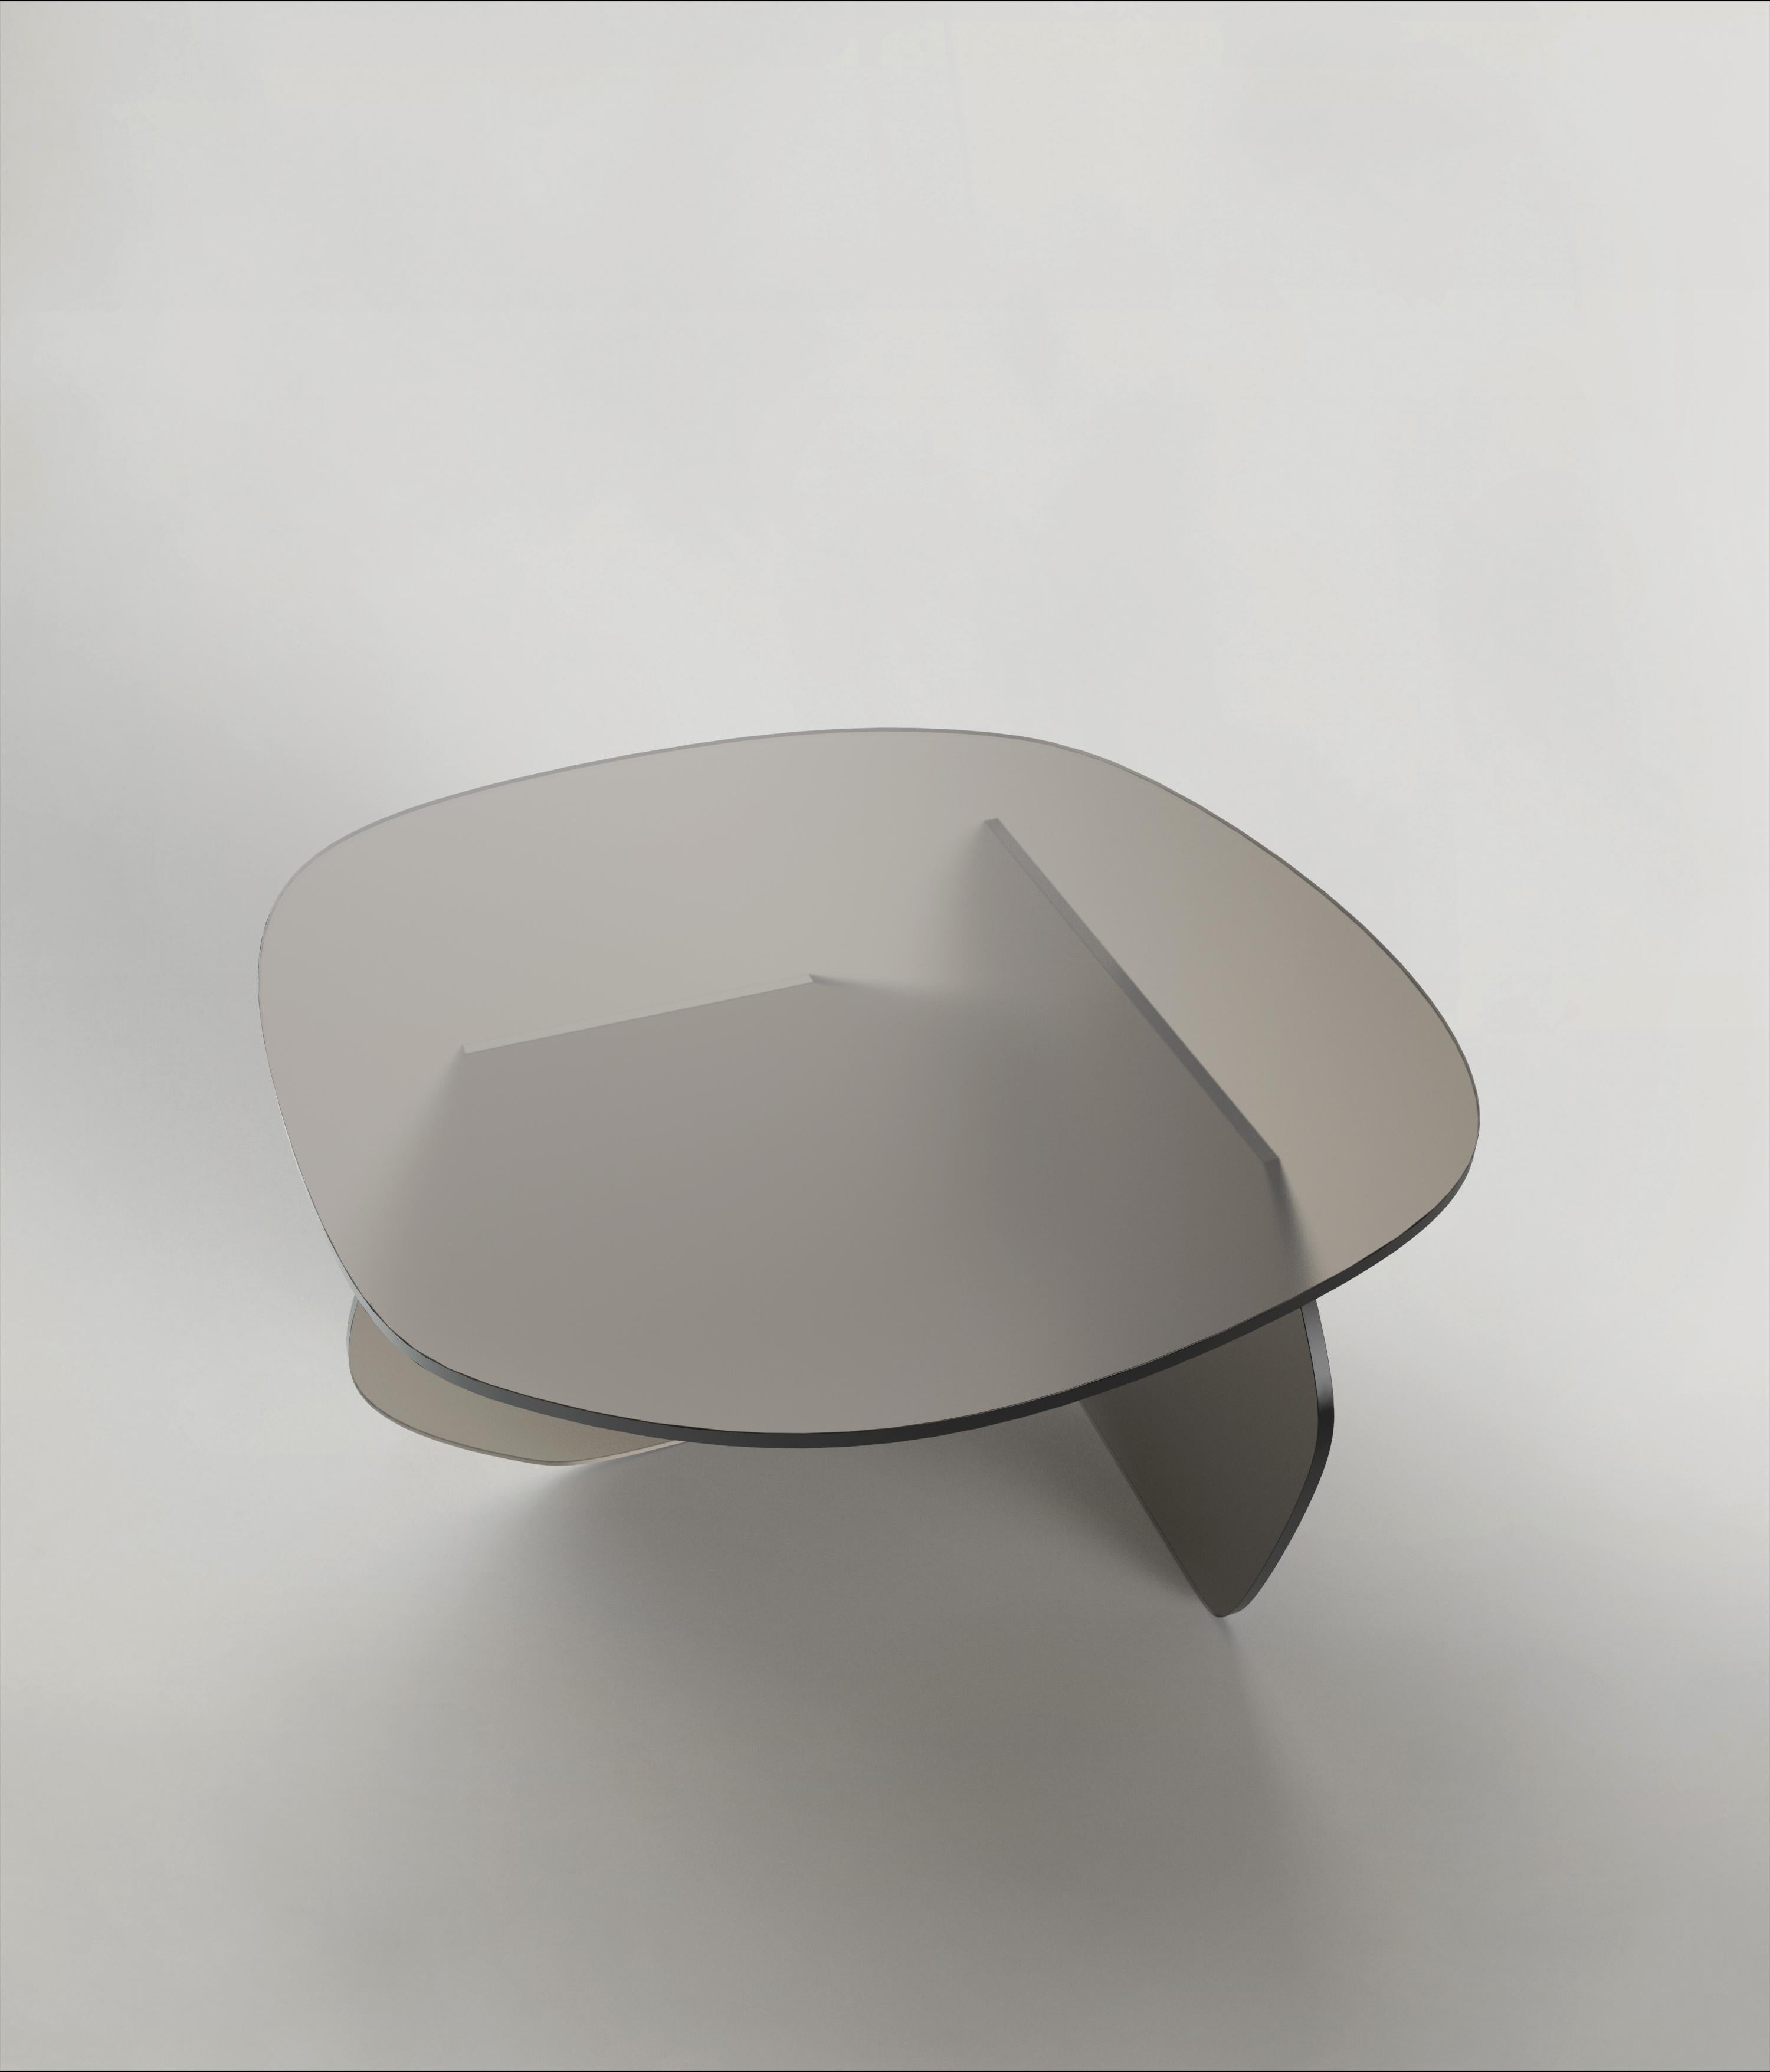 Italian Limited Edition Bronzed Glass Table, Panorama V2 by Edizione Limitata